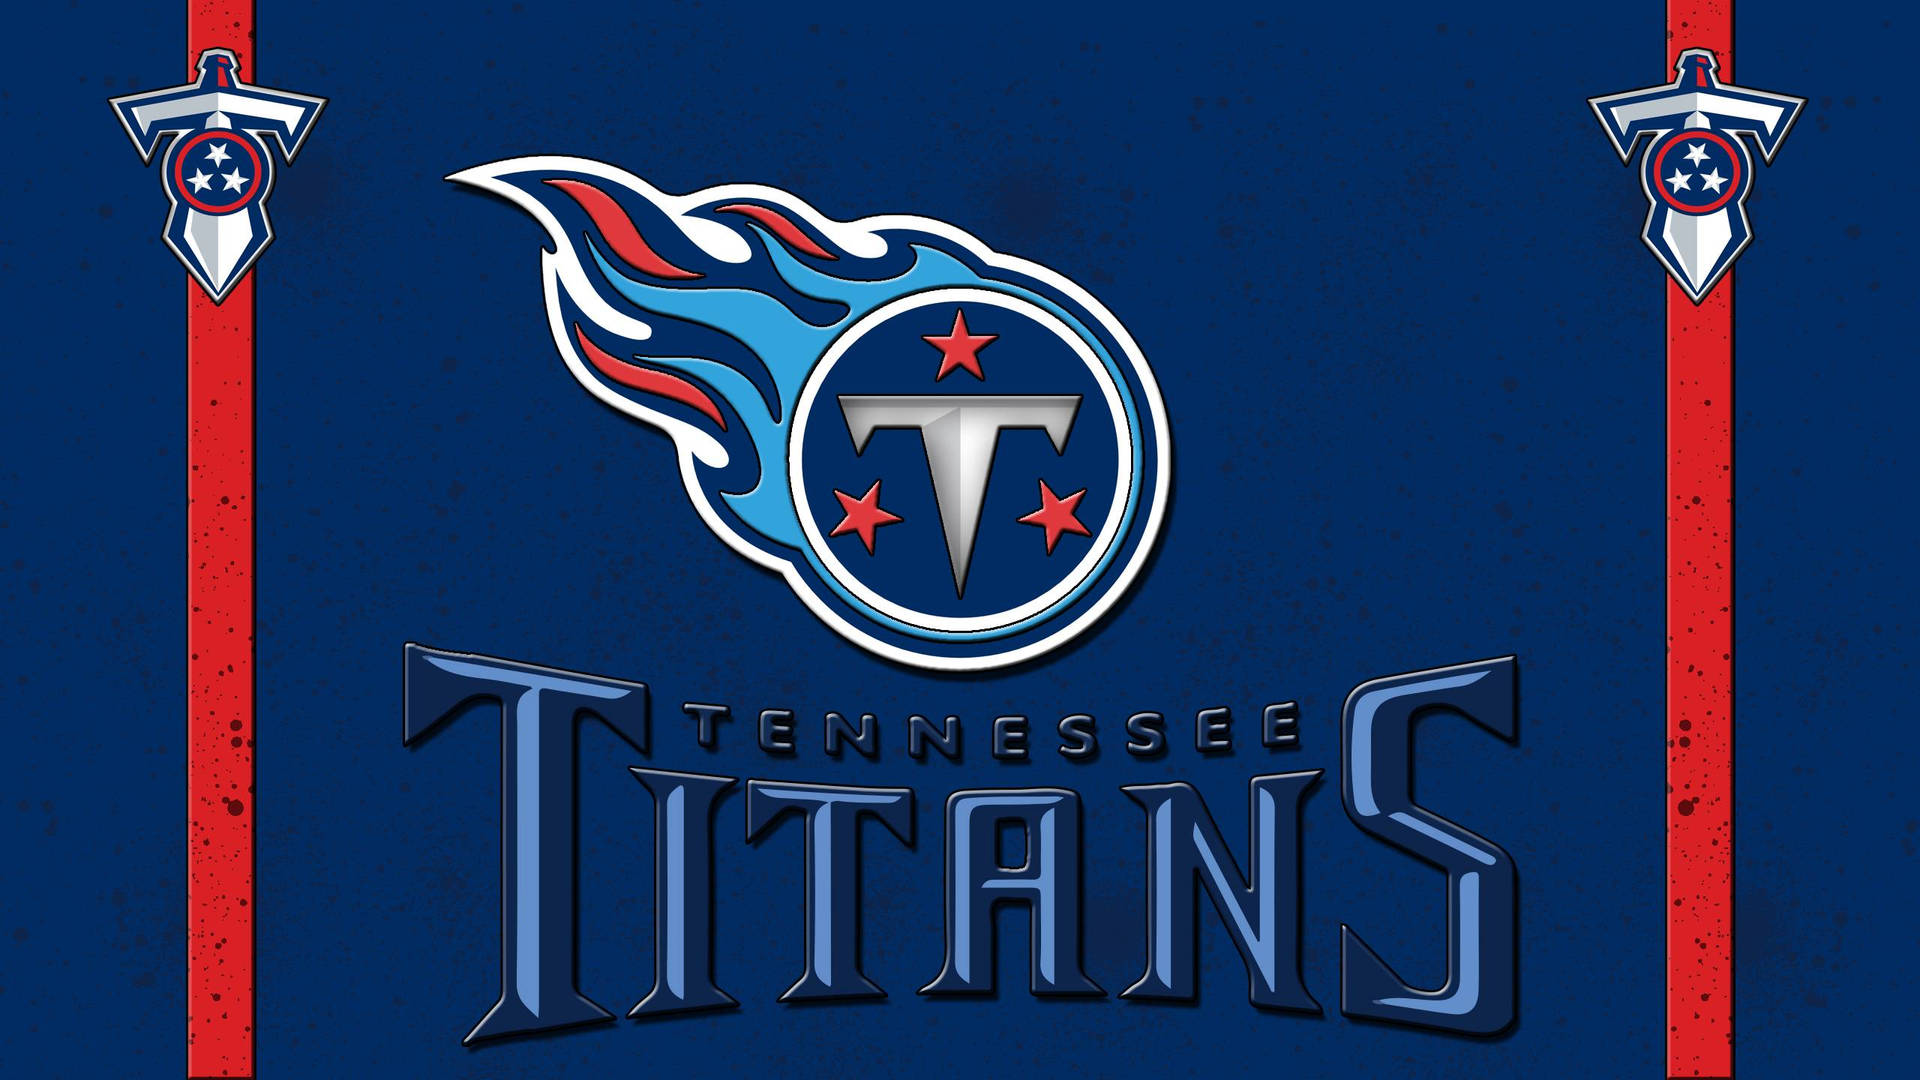 Tennessee Titans Sports Team Wallpaper